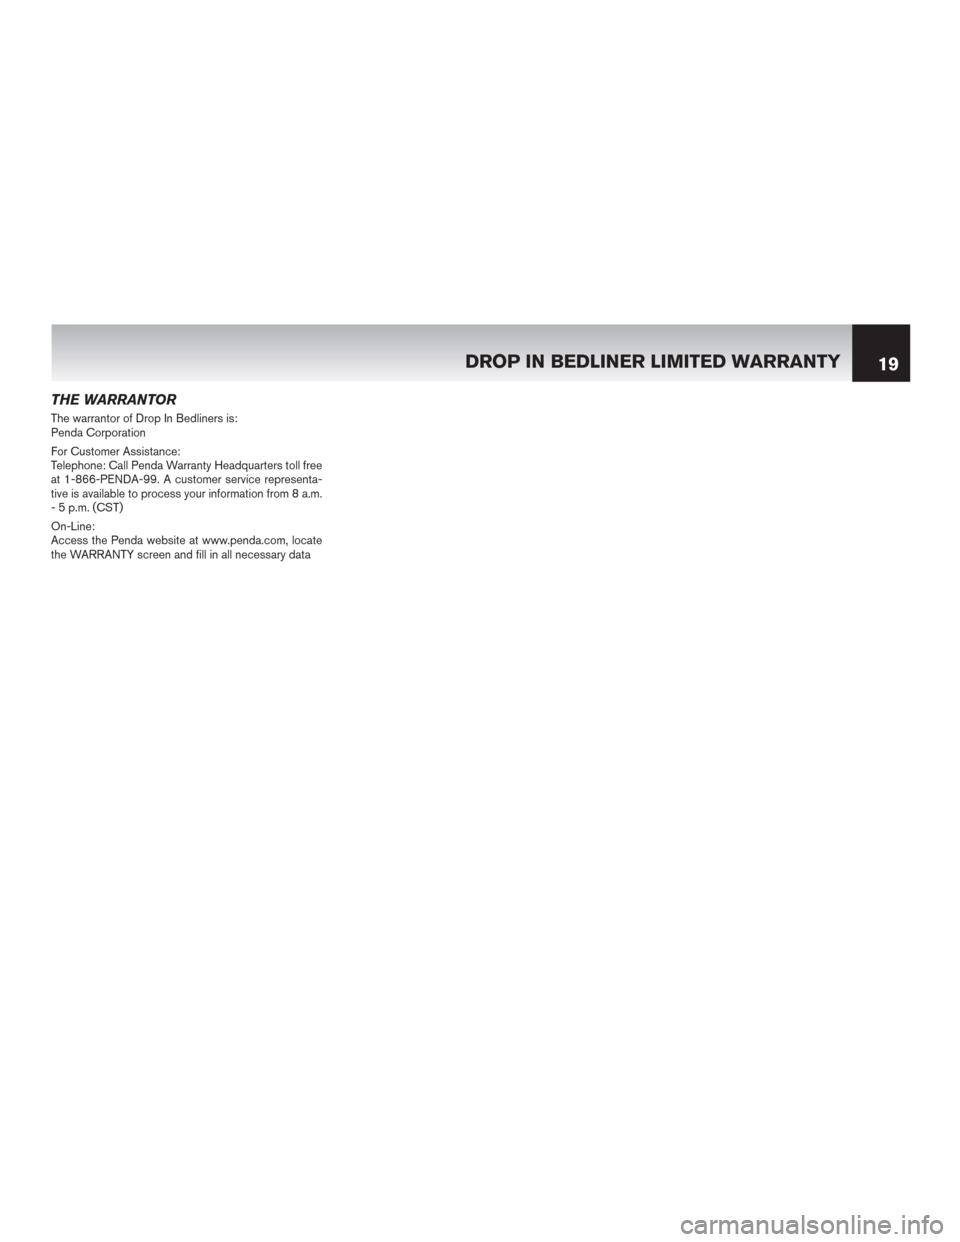 NISSAN ALTIMA 2015 L33 / 5.G Warranty Booklet THE WARRANTOR
The warrantor of Drop In Bedliners is:
Penda Corporation
For Customer Assistance:
Telephone: Call Penda Warranty Headquarters toll free
at 1-866-PENDA-99. A customer service representa-
